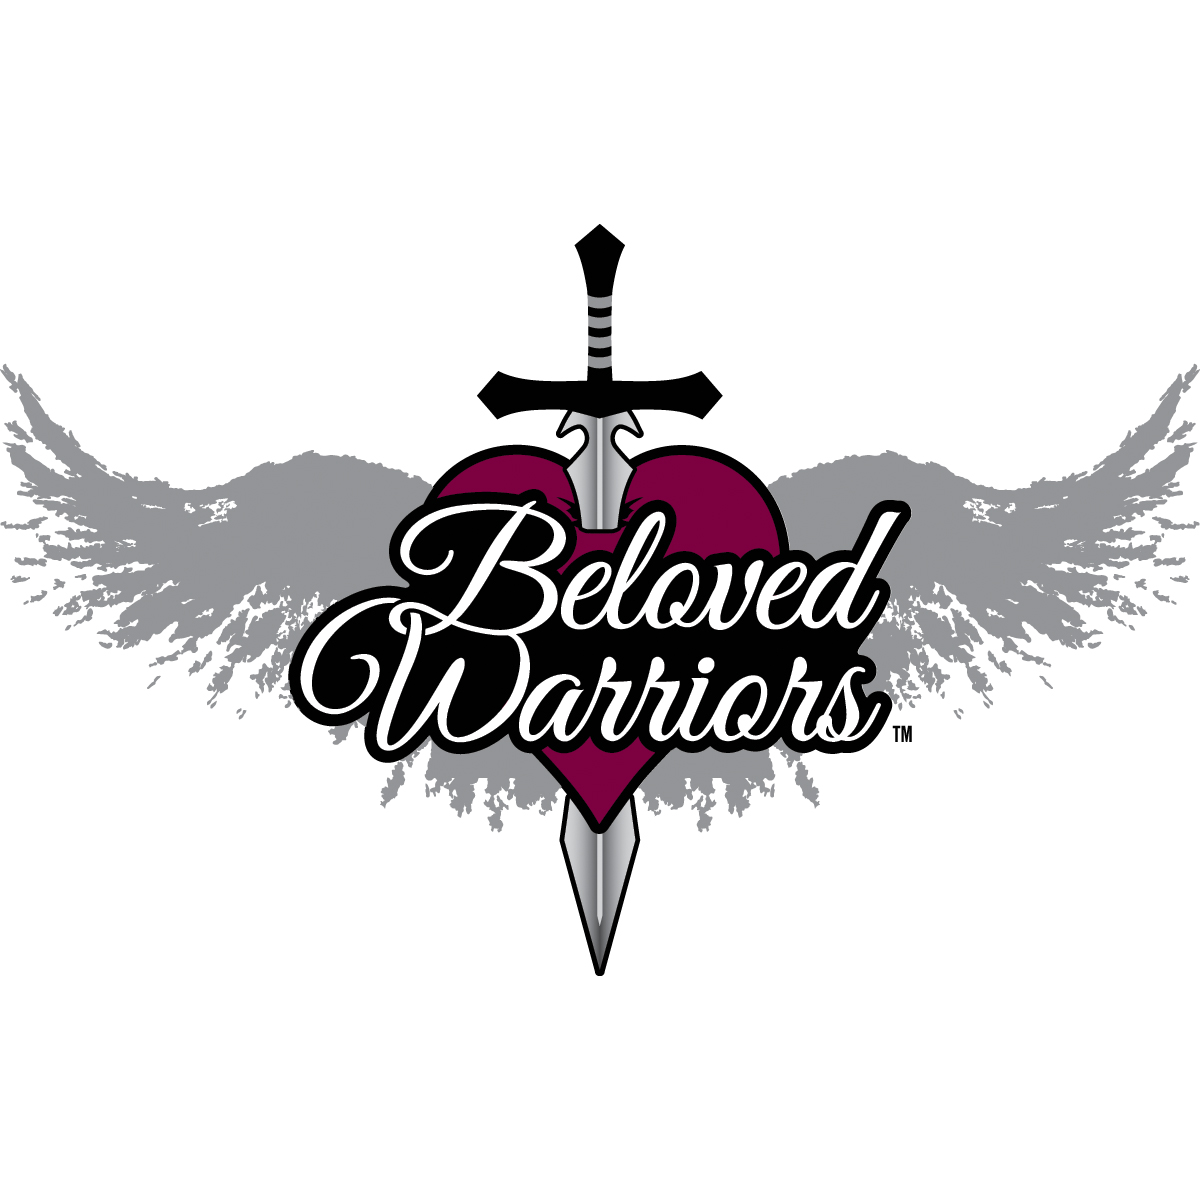 Beloved Warriors